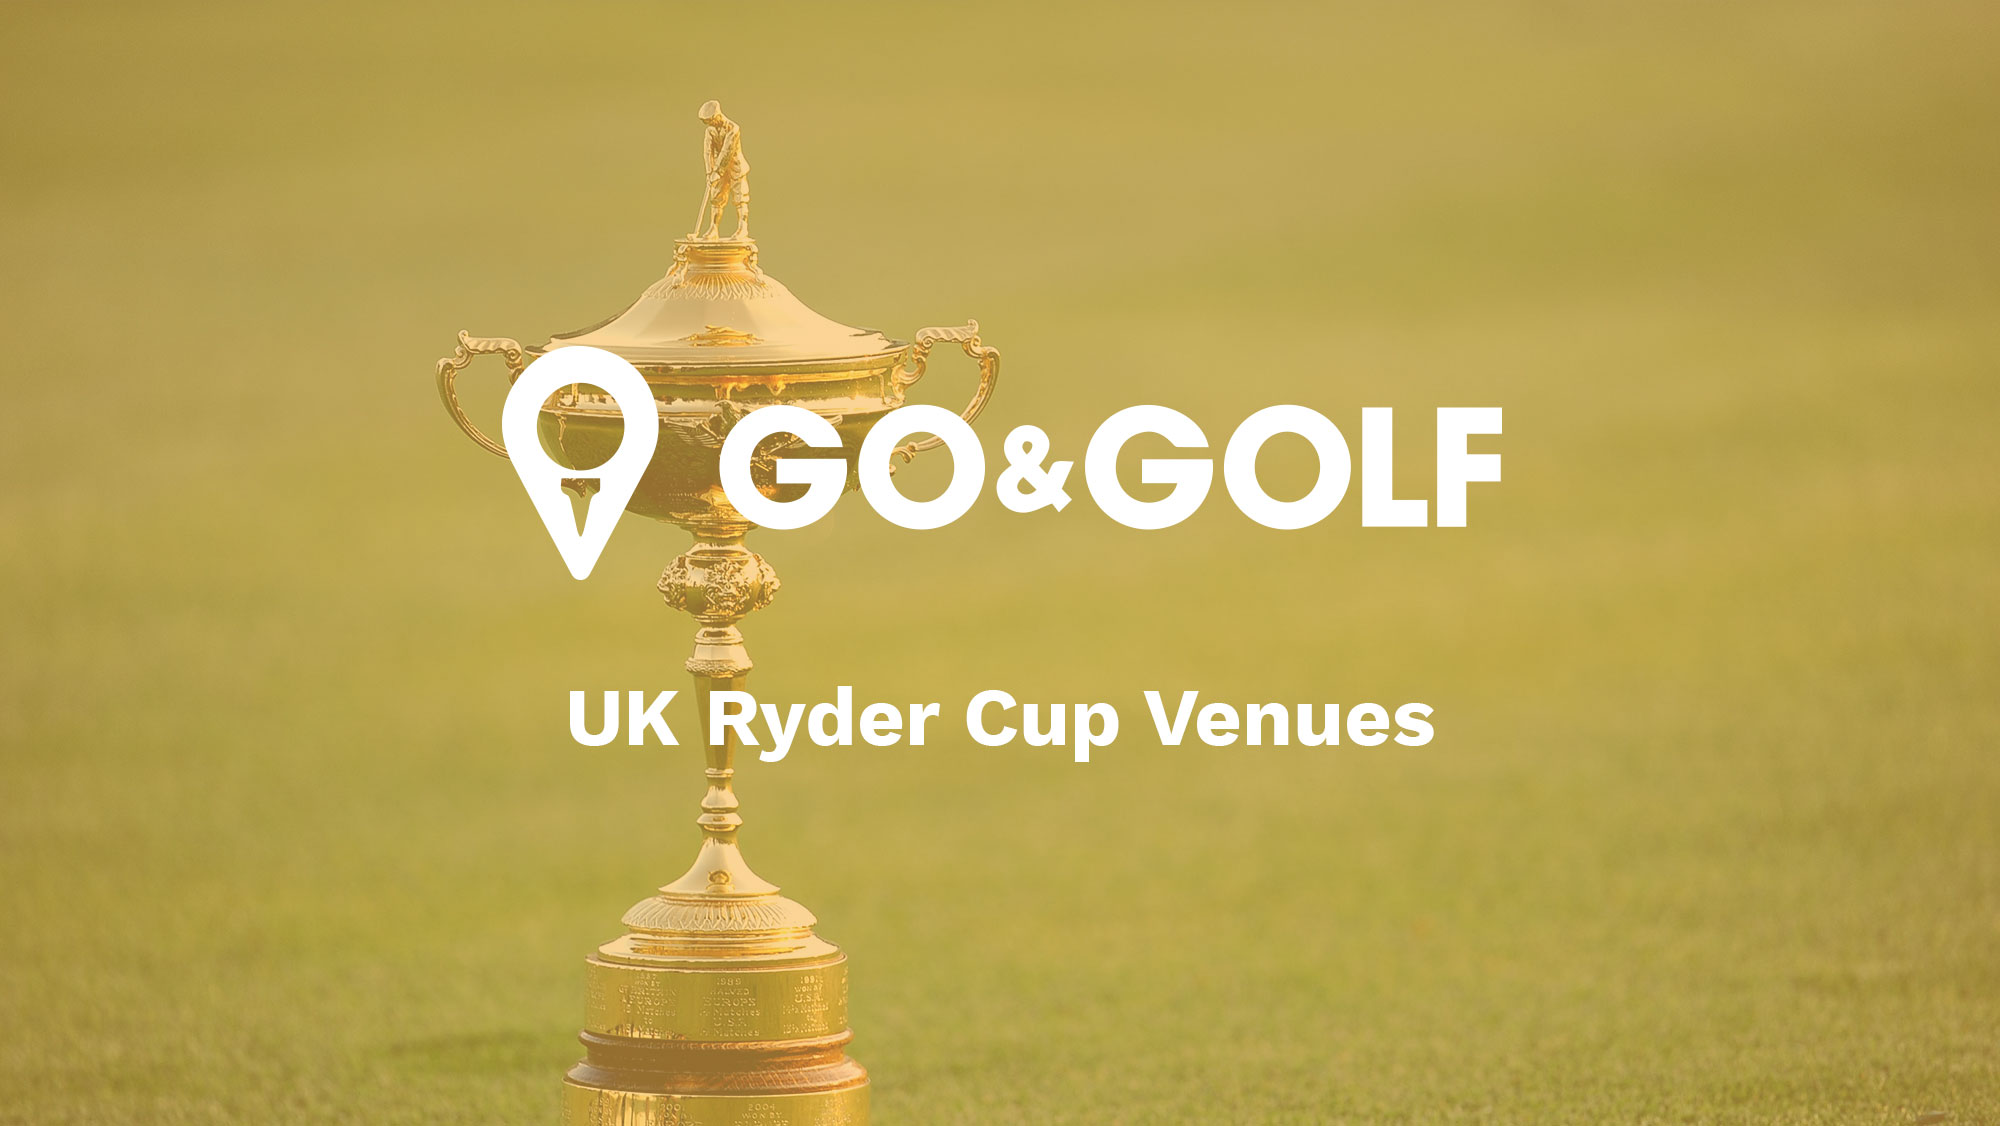 UK Ryder Cup Venues, A Comprehensive List Go&Golf